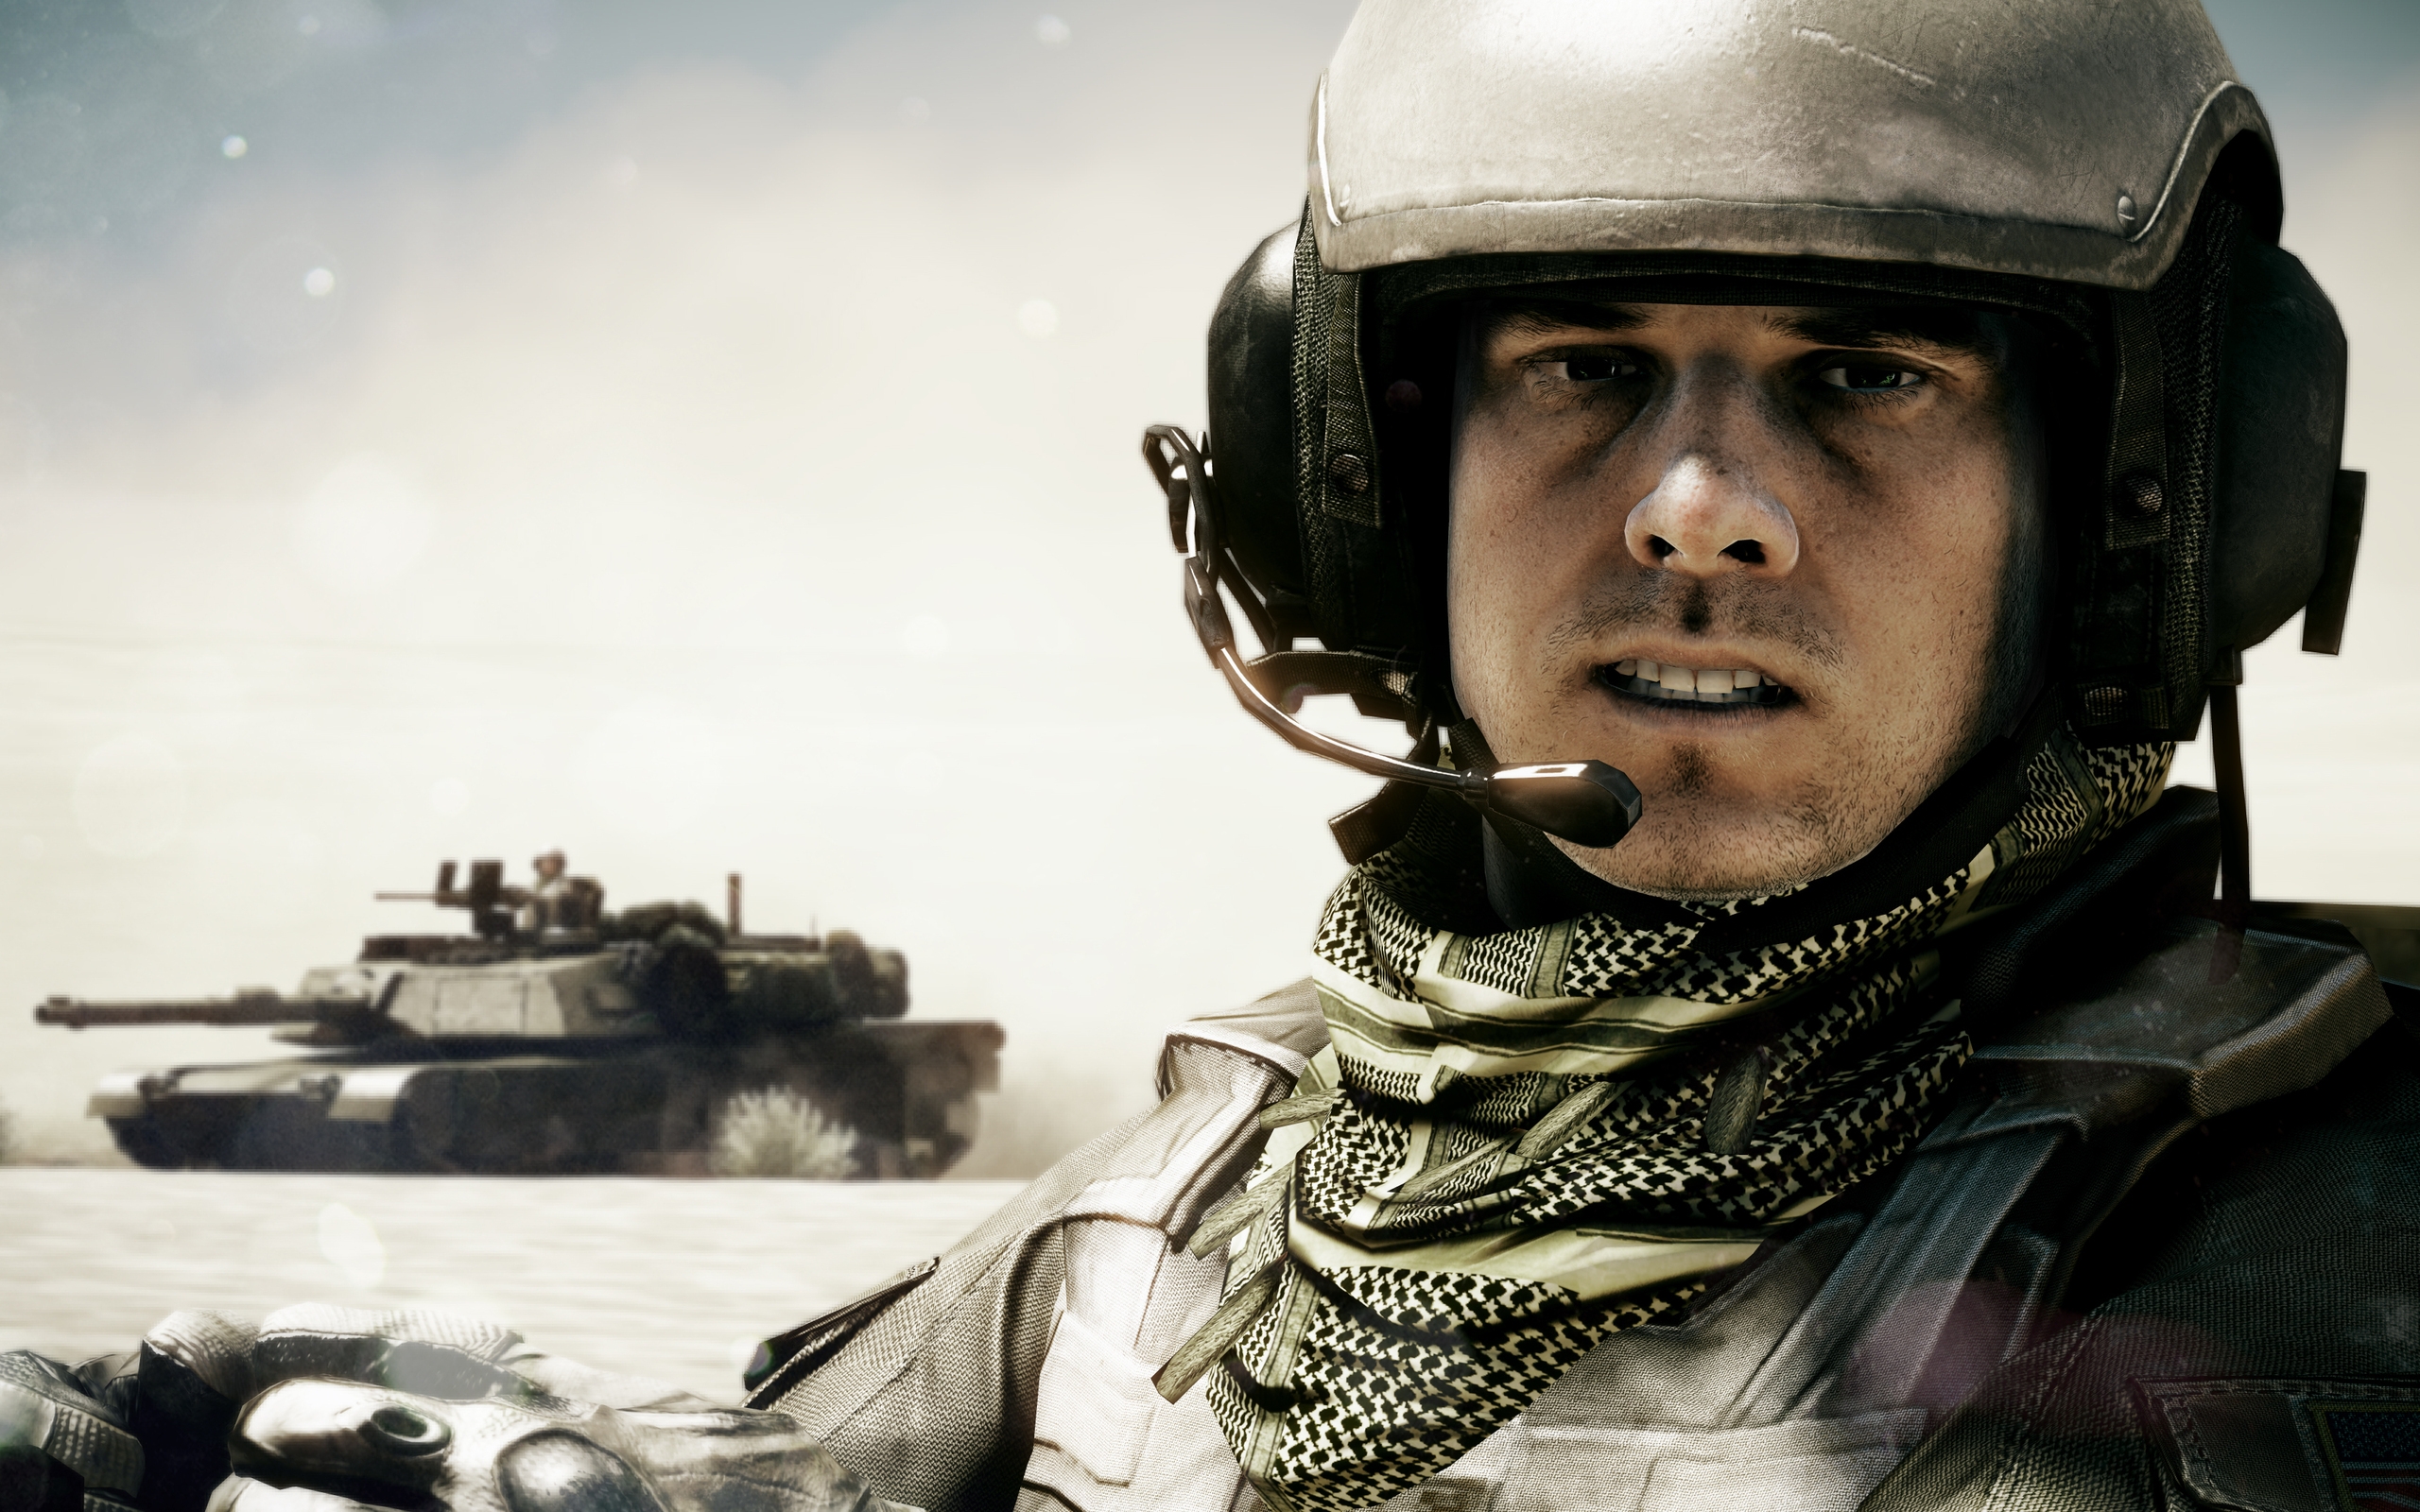 Battlefield 3 Character for 2560 x 1600 widescreen resolution